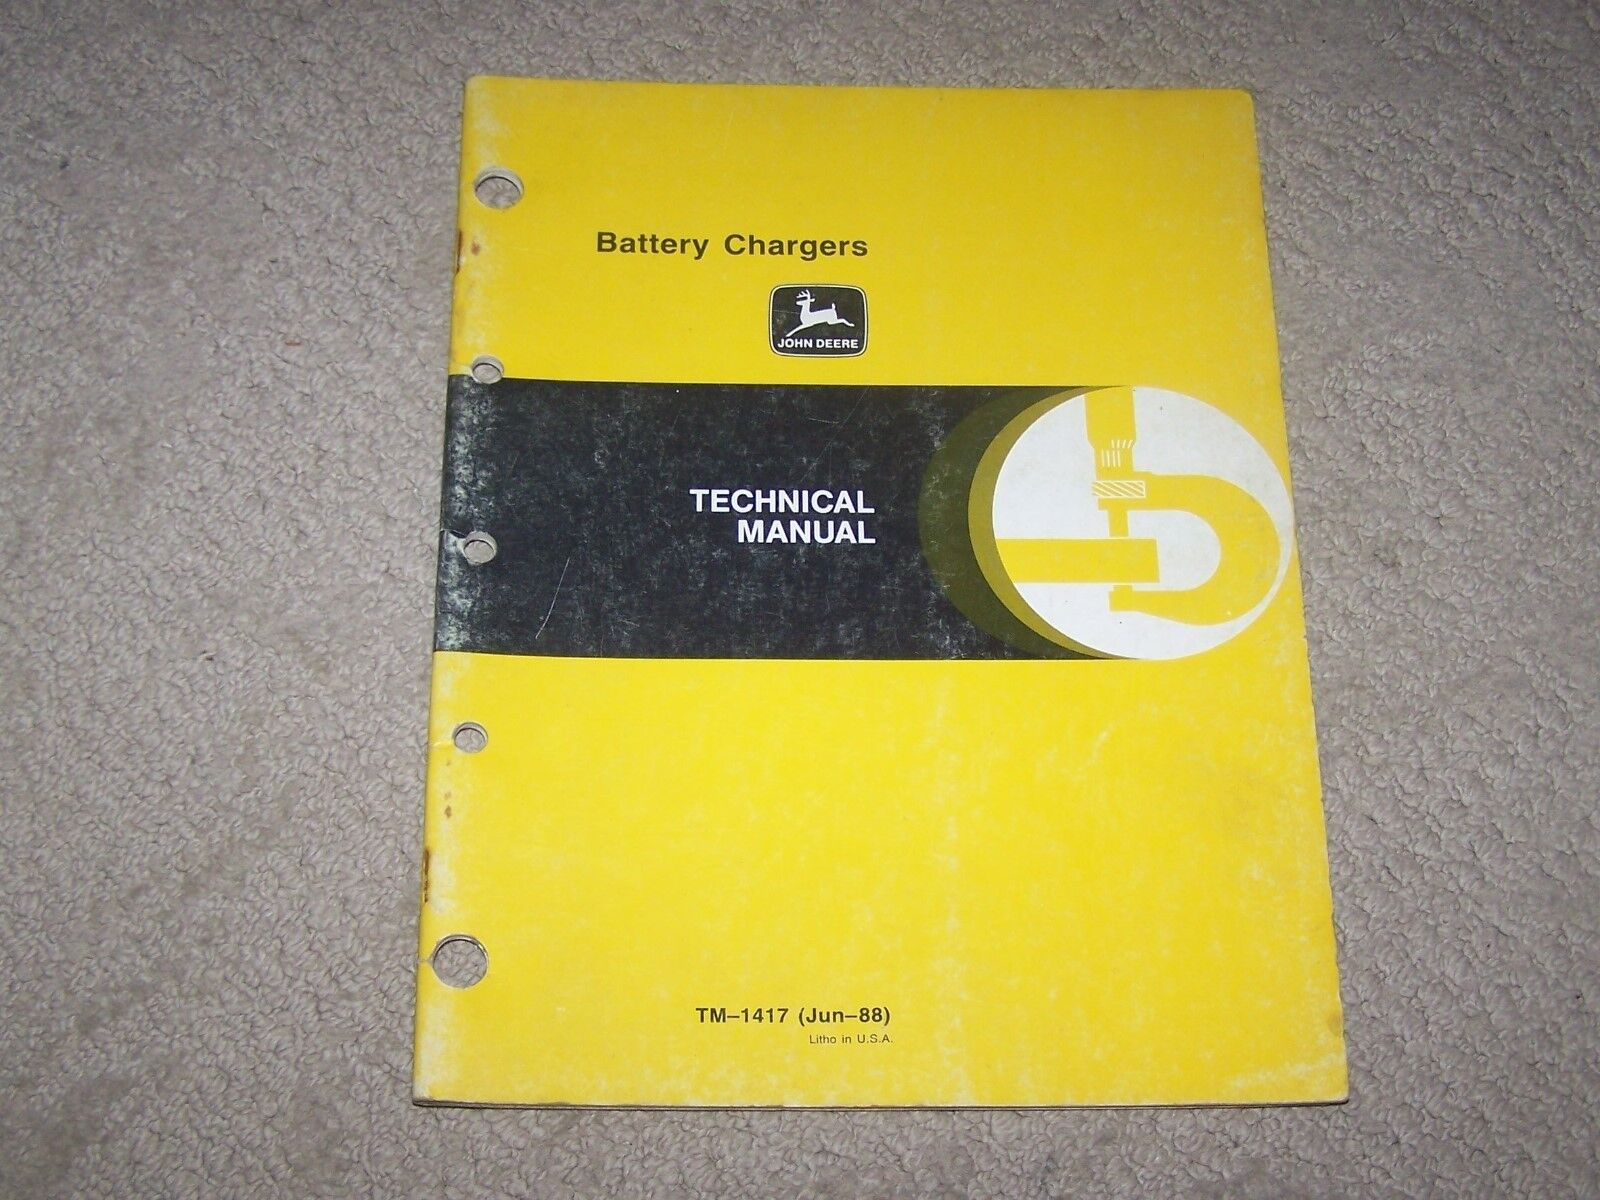 John Deere Used Battery Chargers  Tech Manual TM1417  B6